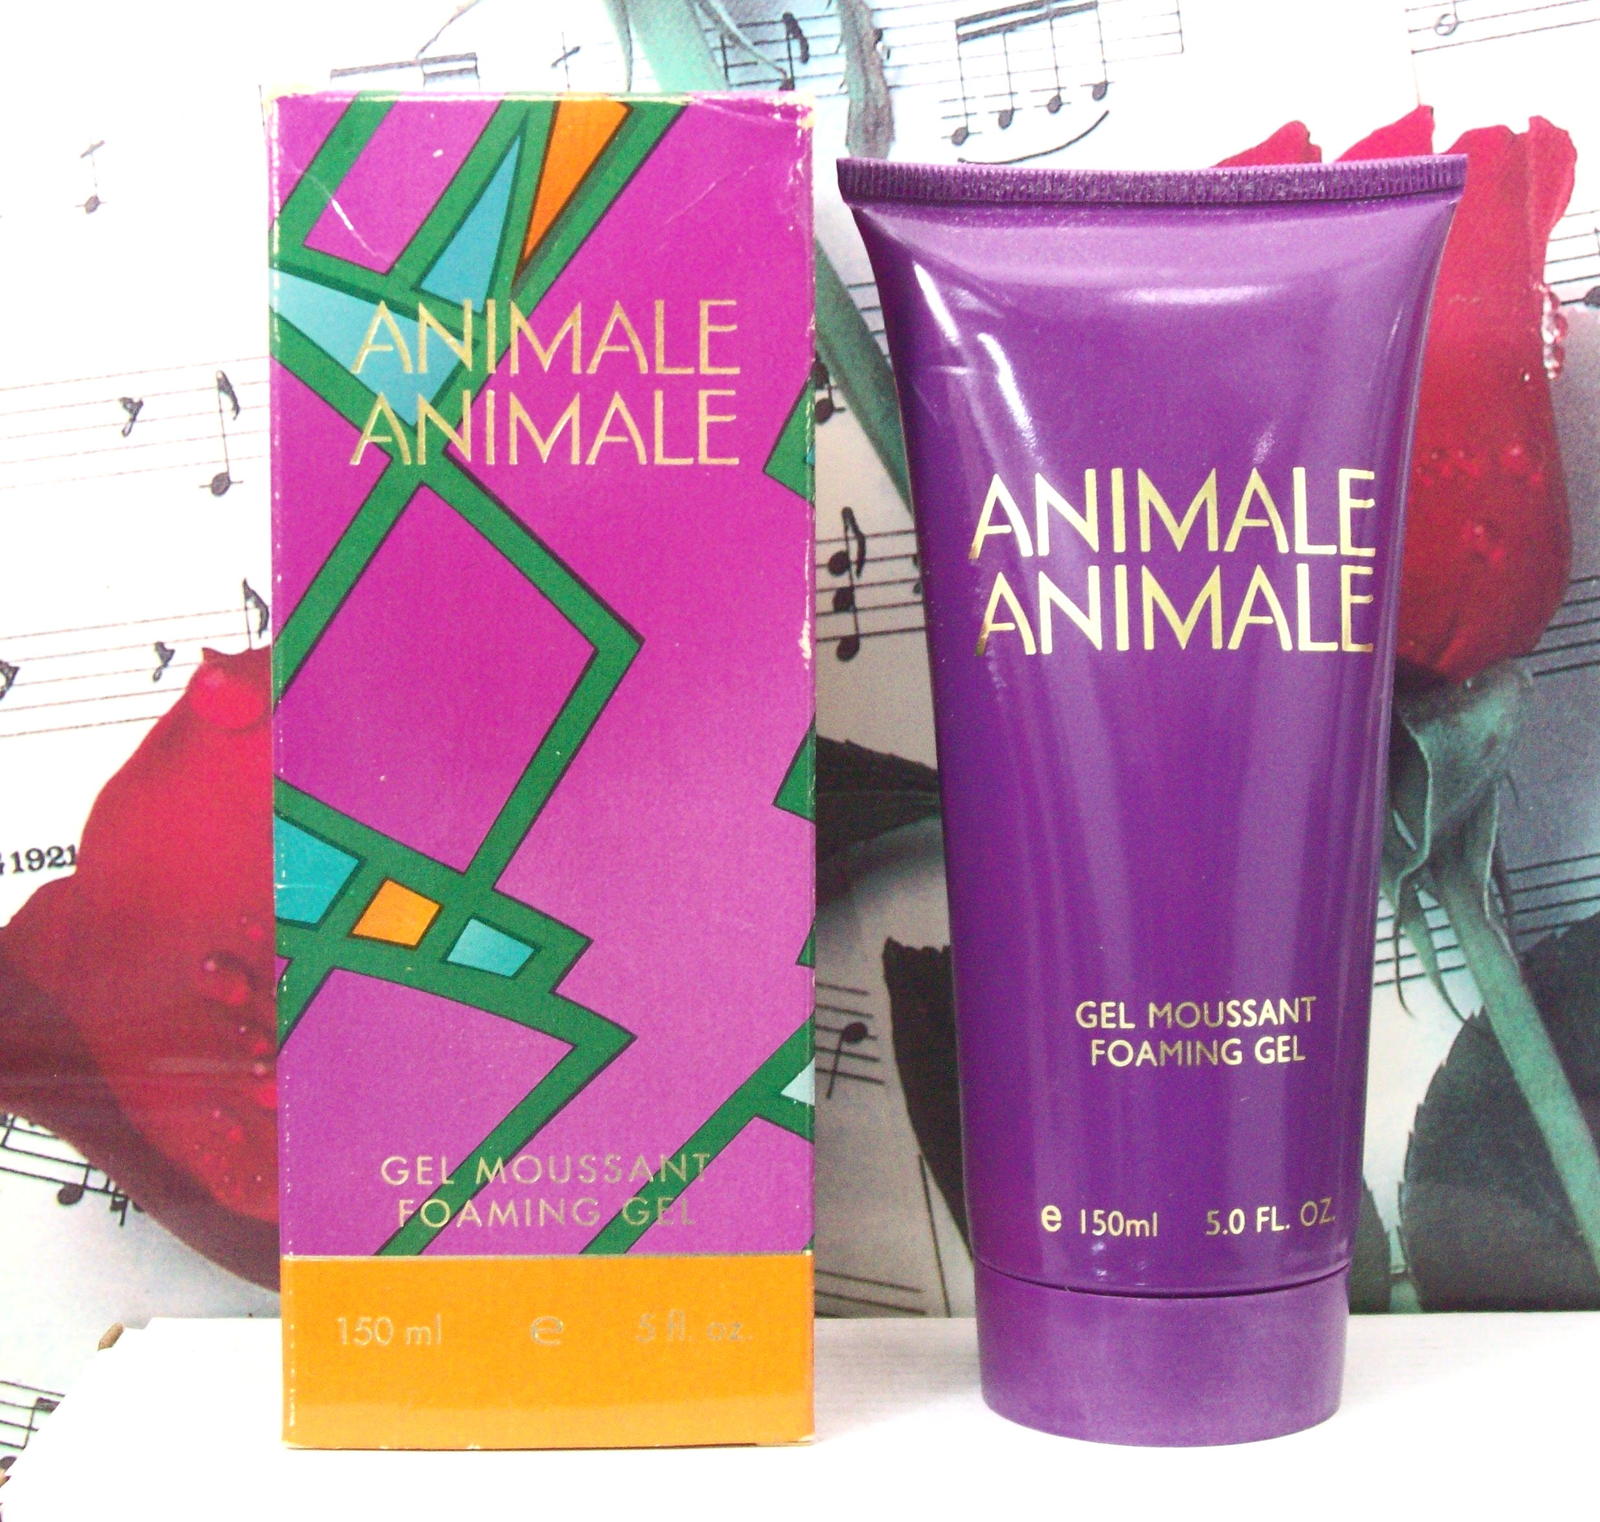 Animale Animale Shower Gel 5.0 FL. OZ. By Parlux. - $19.99